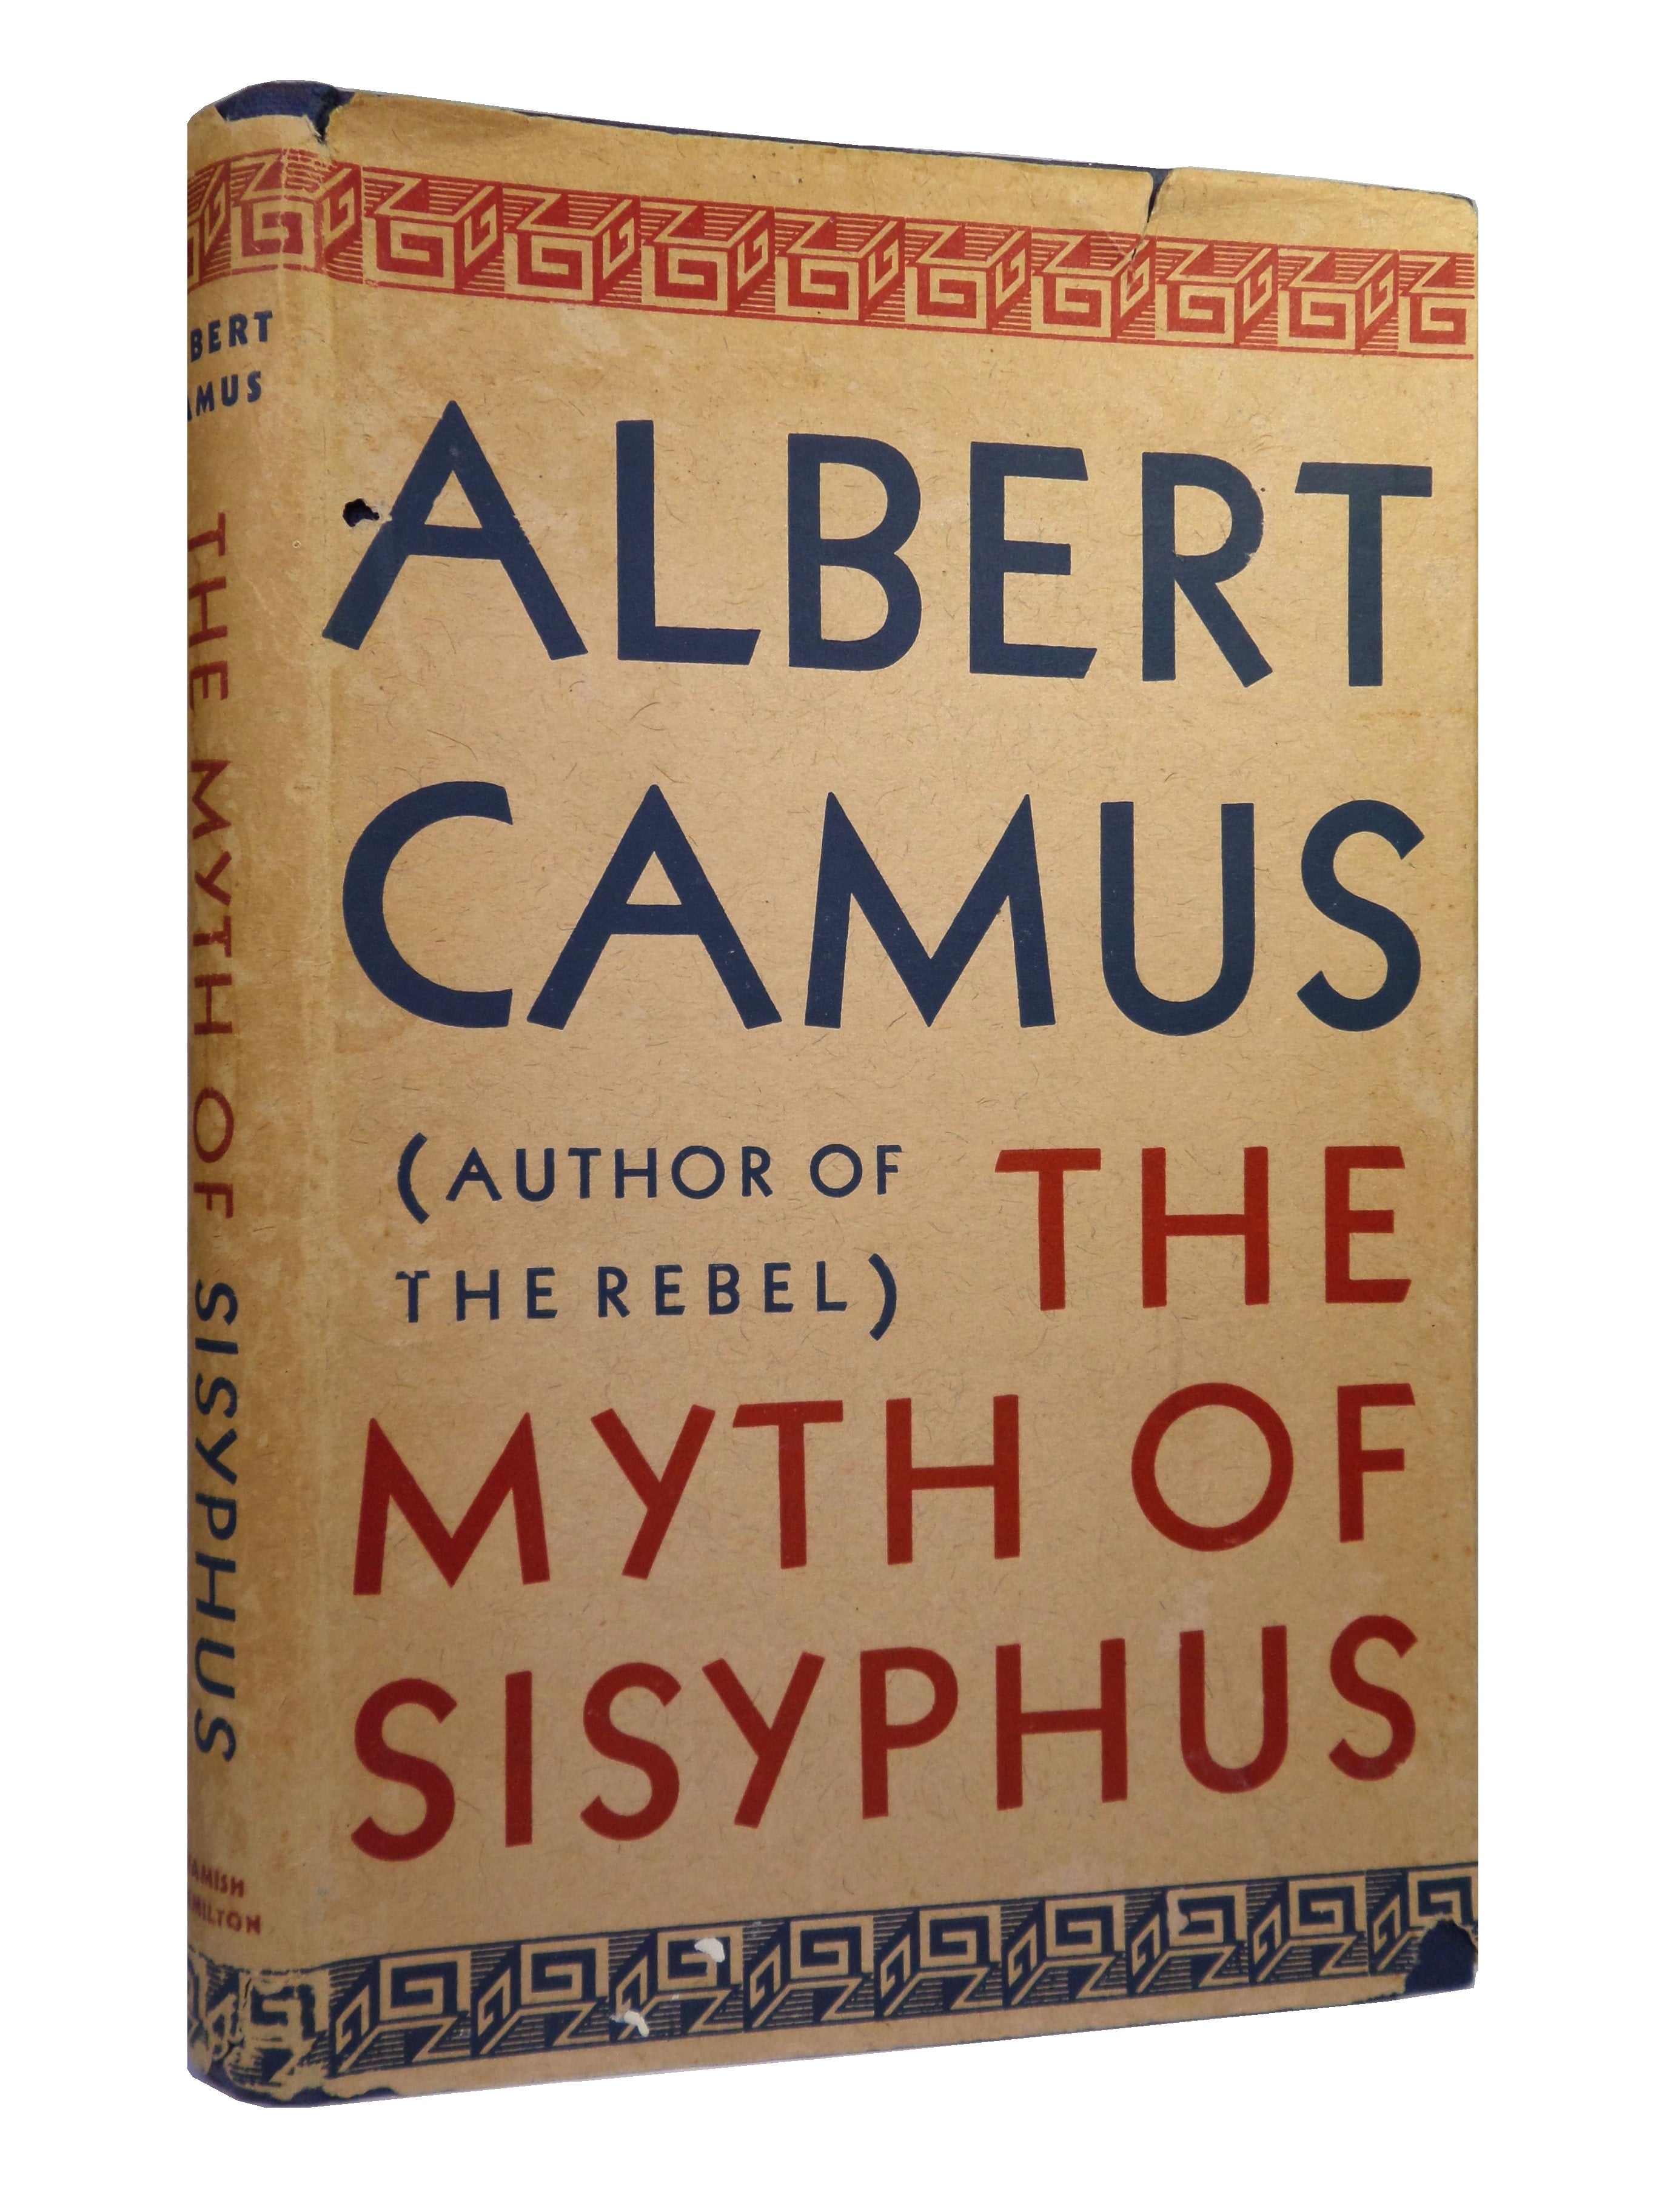 THE MYTH OF SISYPHUS BY ALBERT CAMUS 1965